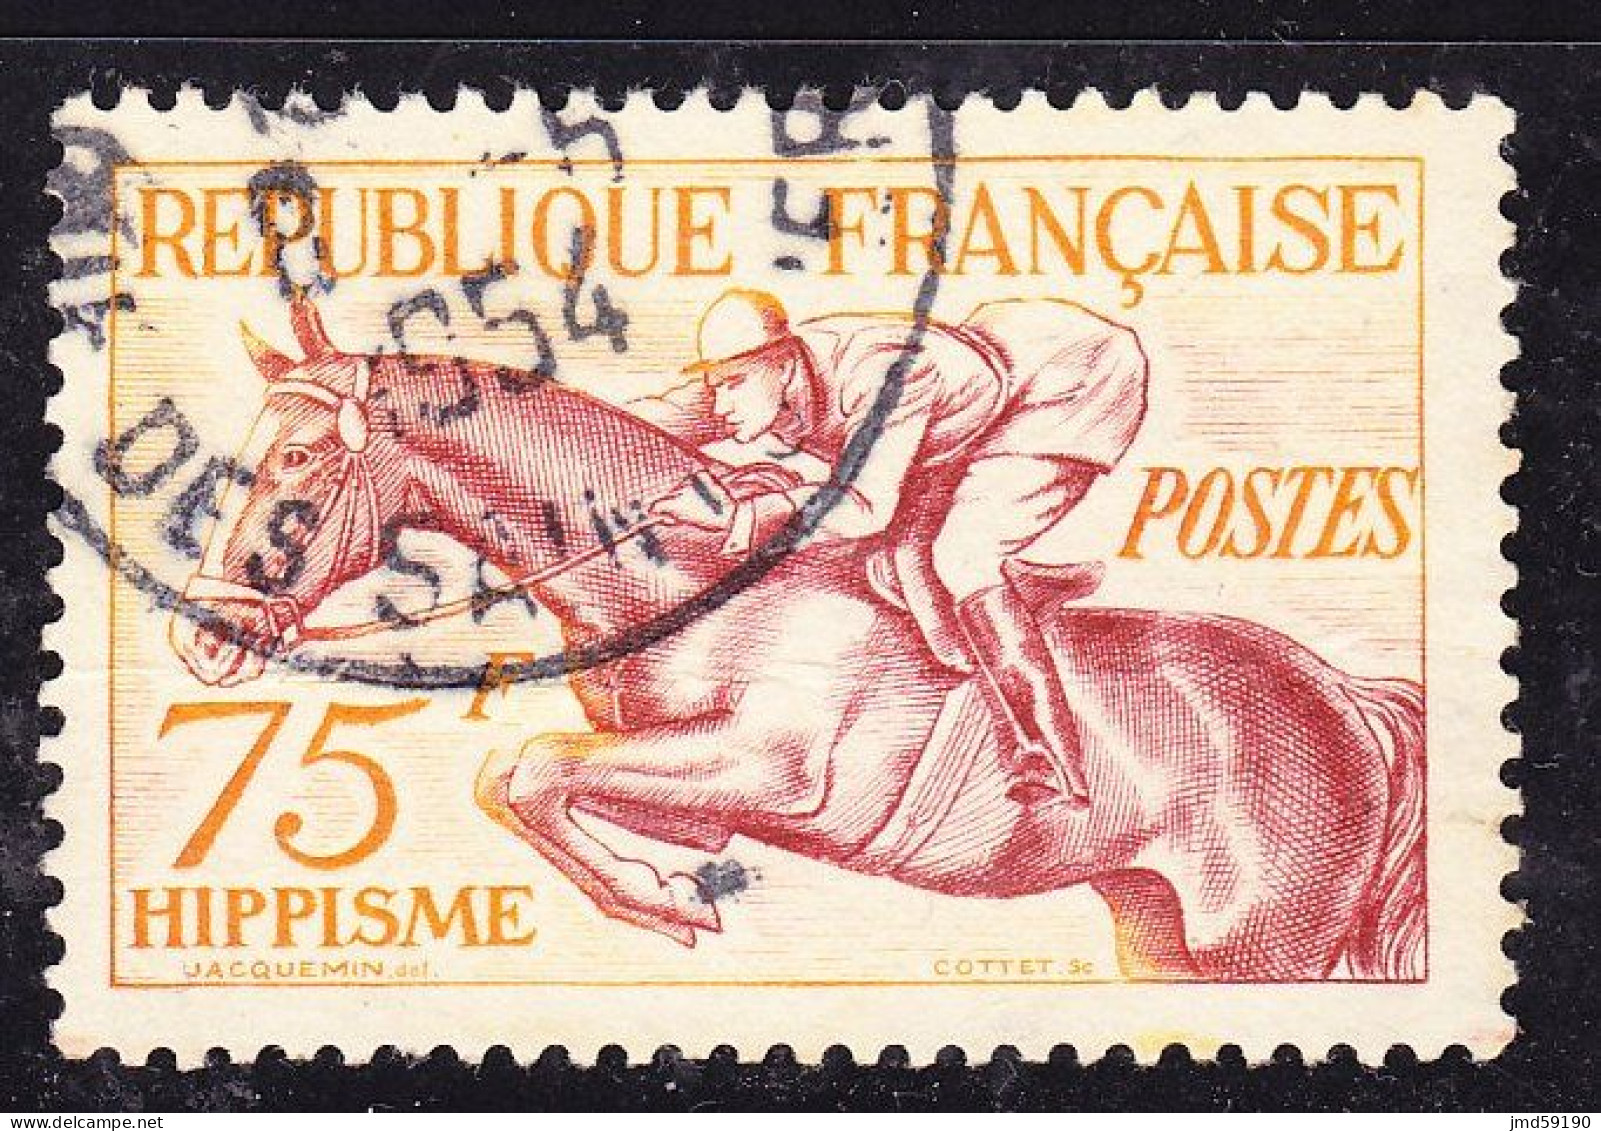 FRANCE Timbre Oblitéré N° 965 - Jeux Olympiques D'HELSINKI 1952 - 75Fr Hippisme - Oblitérés